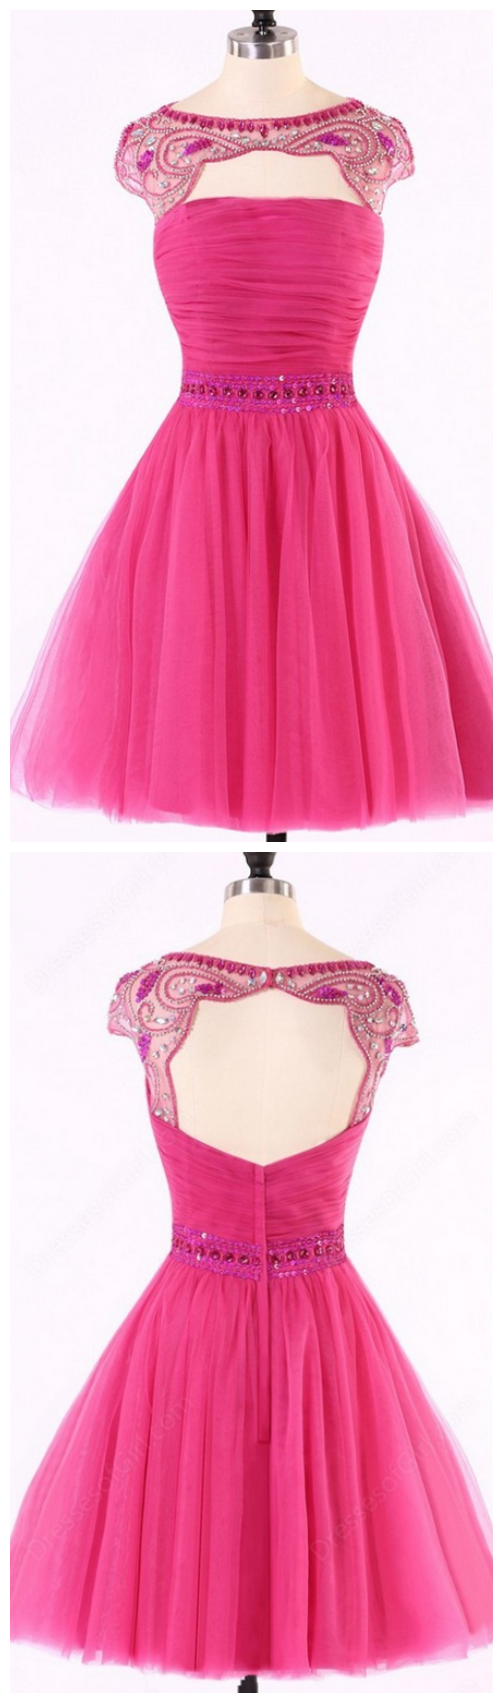 Backless Homecoming Dress, Sexy Pink Homecoming Dress, Tulle Homecoming Dress, Sexy Homecoming Dress